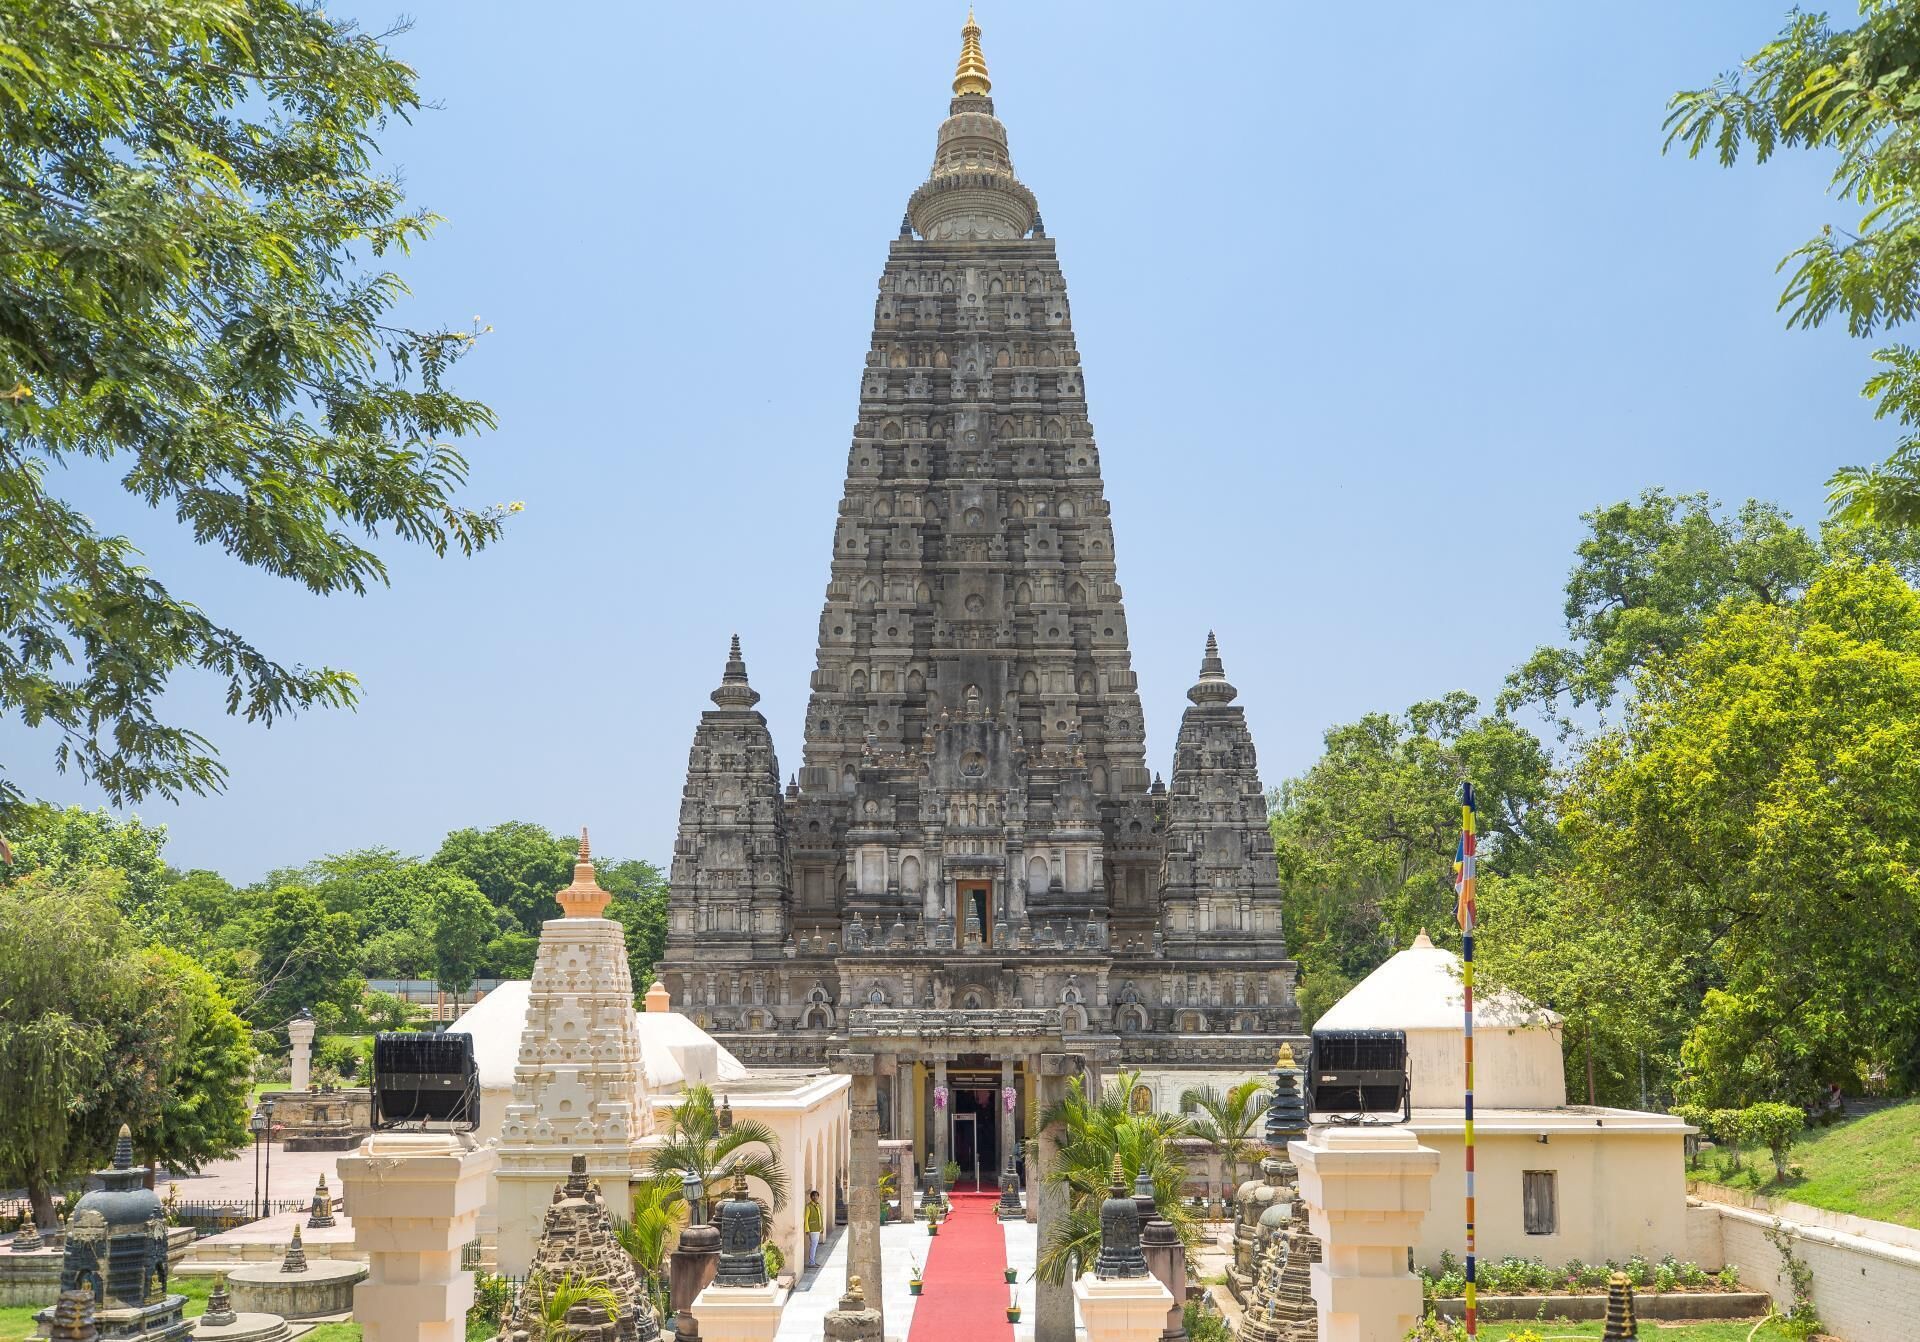  Bodhgaya  Sightseeing With Monuments Entrances